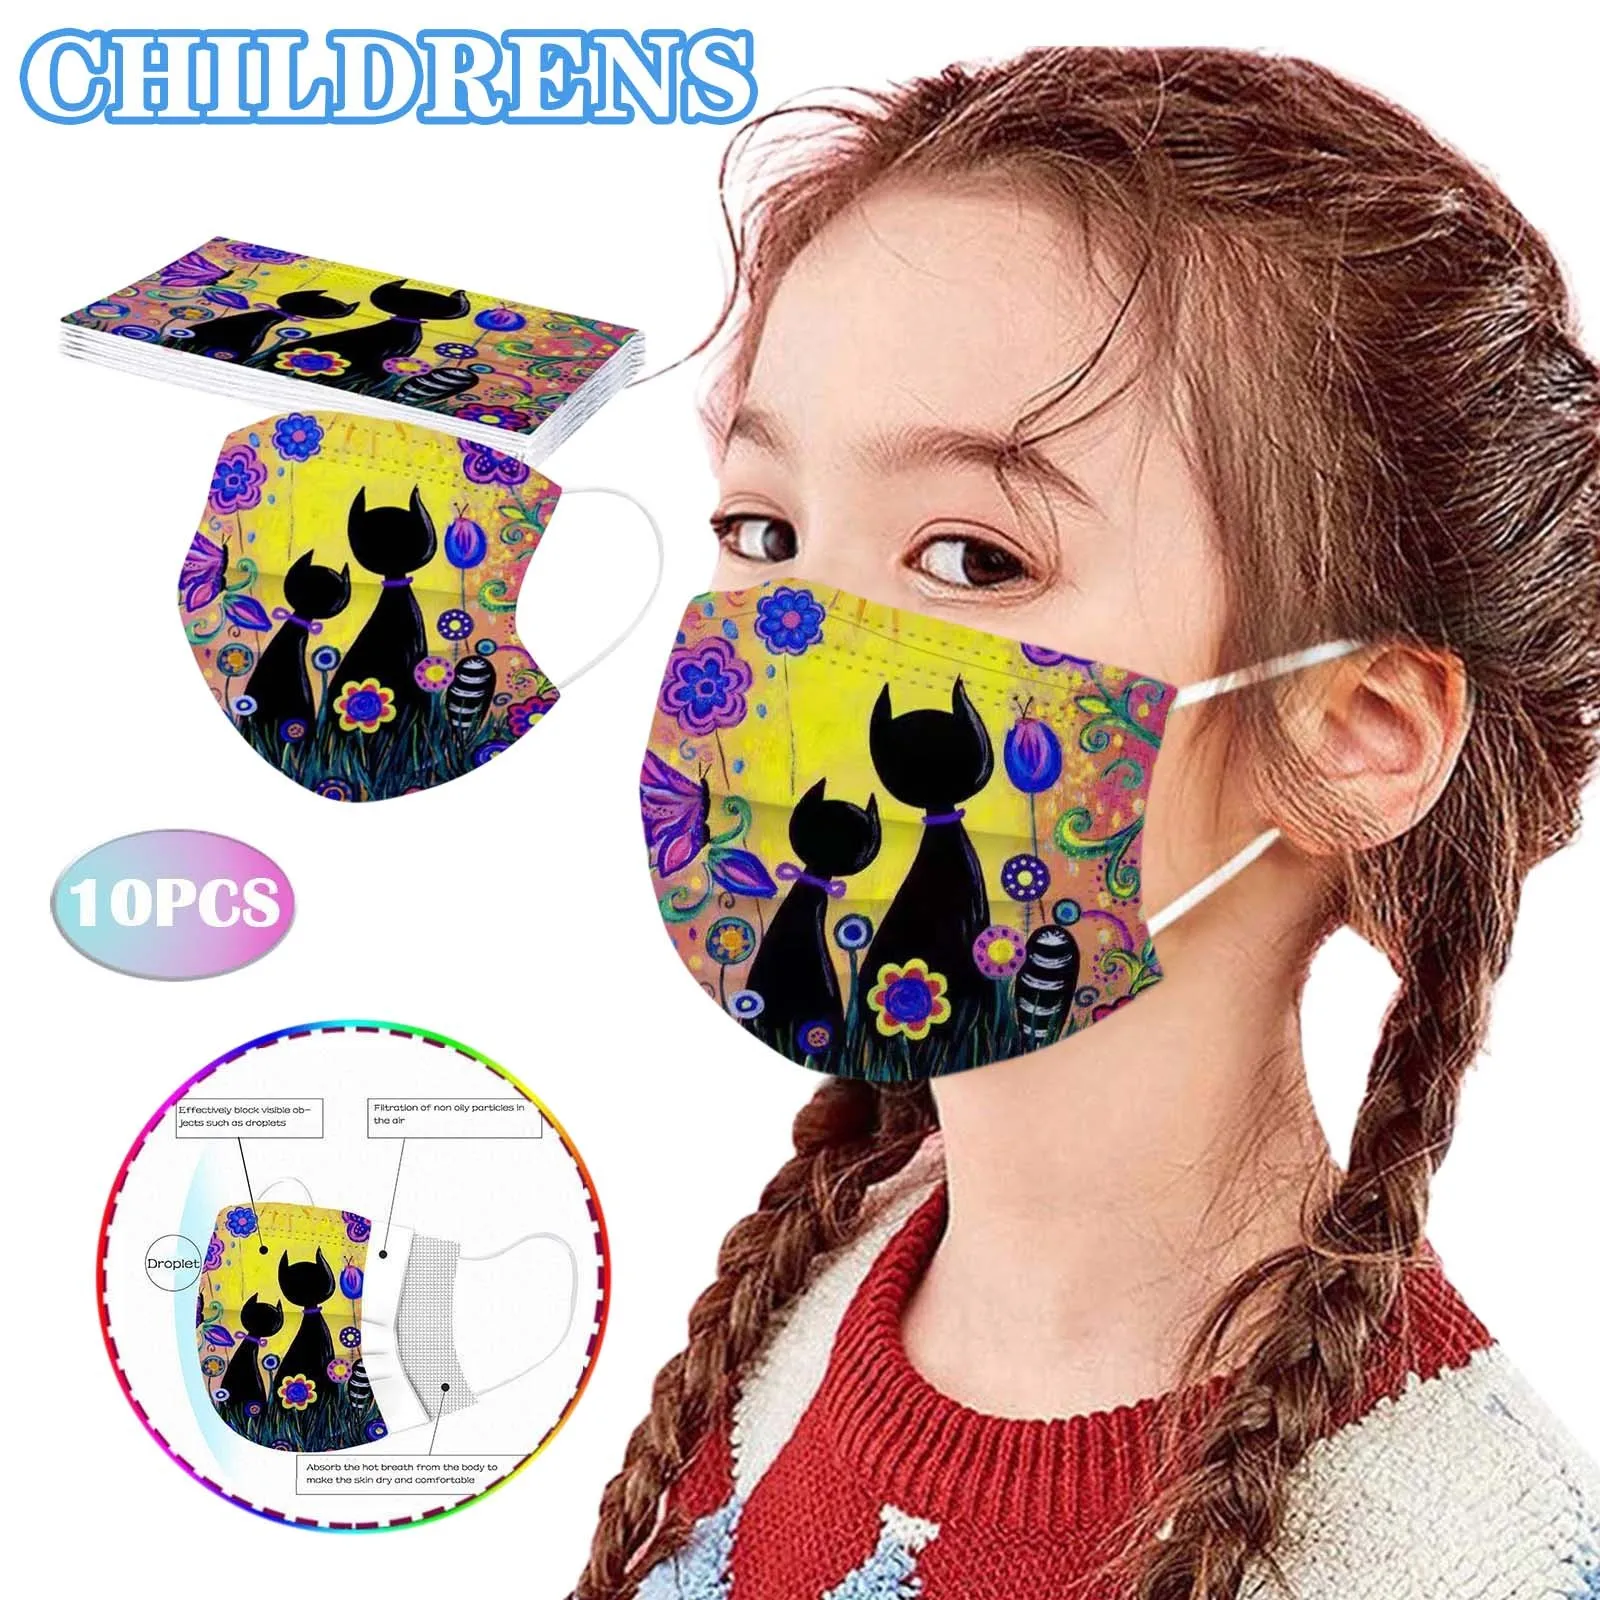 10pcs Cartoon Children's Printed Protective Disposable Mask For Face Christmas Halloween Cosplay Masks Masque Enfant | Тематическая